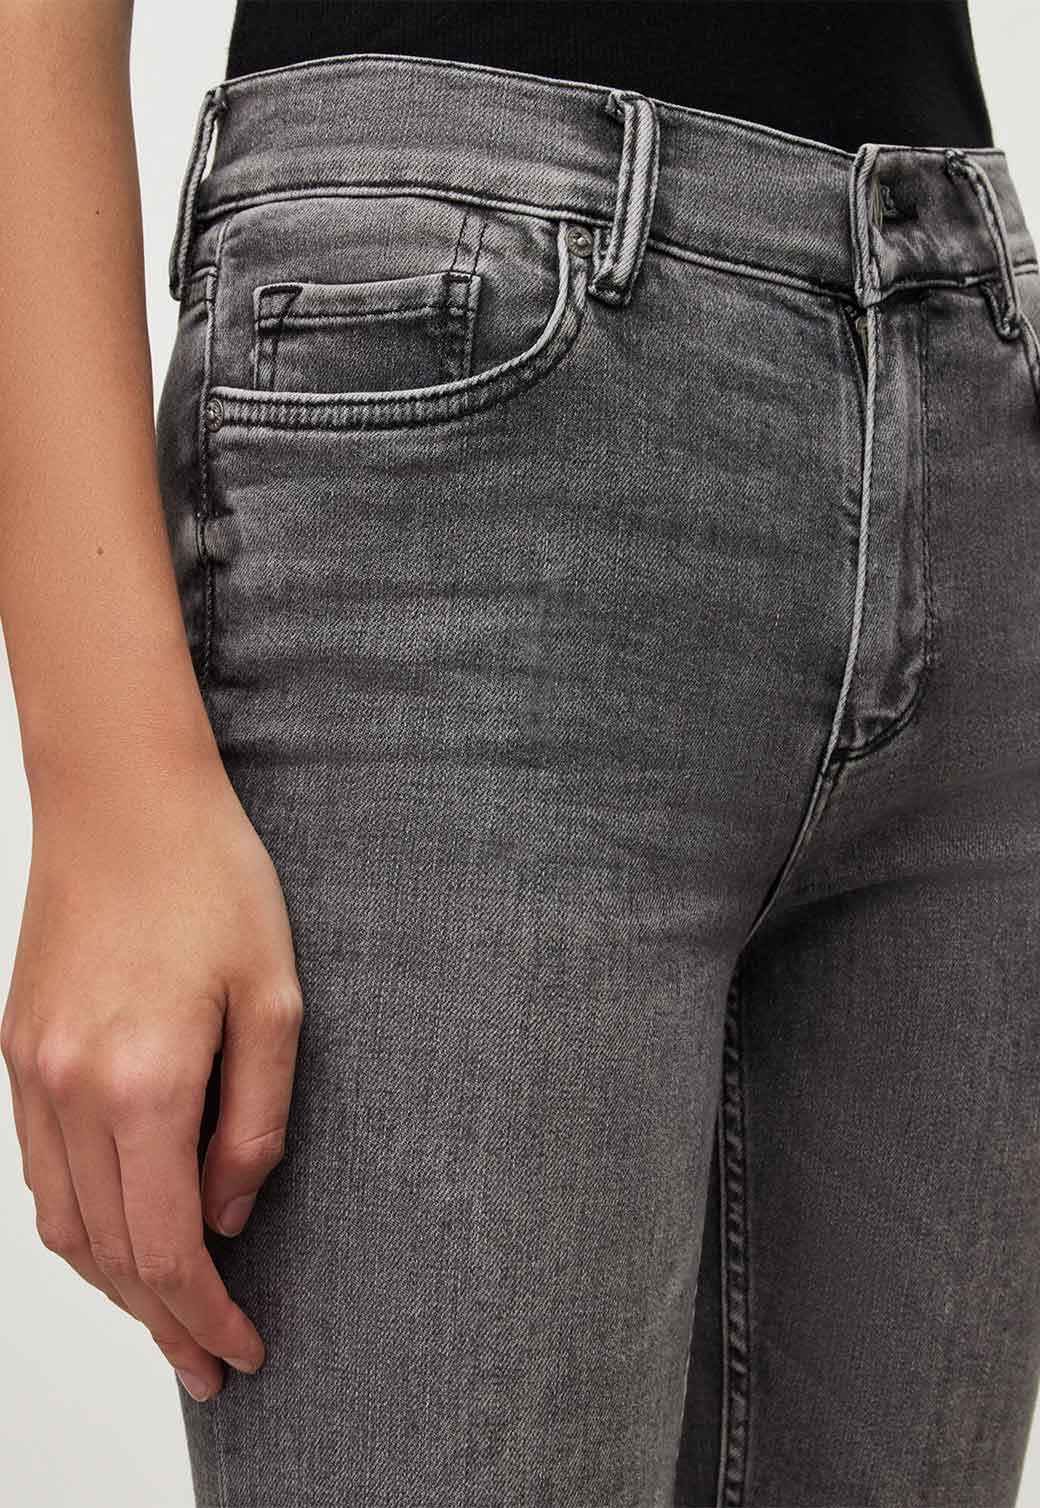 Dark Slate Gray ג'ינס סקיני ארוך לנשים Dax ALLSAINTS